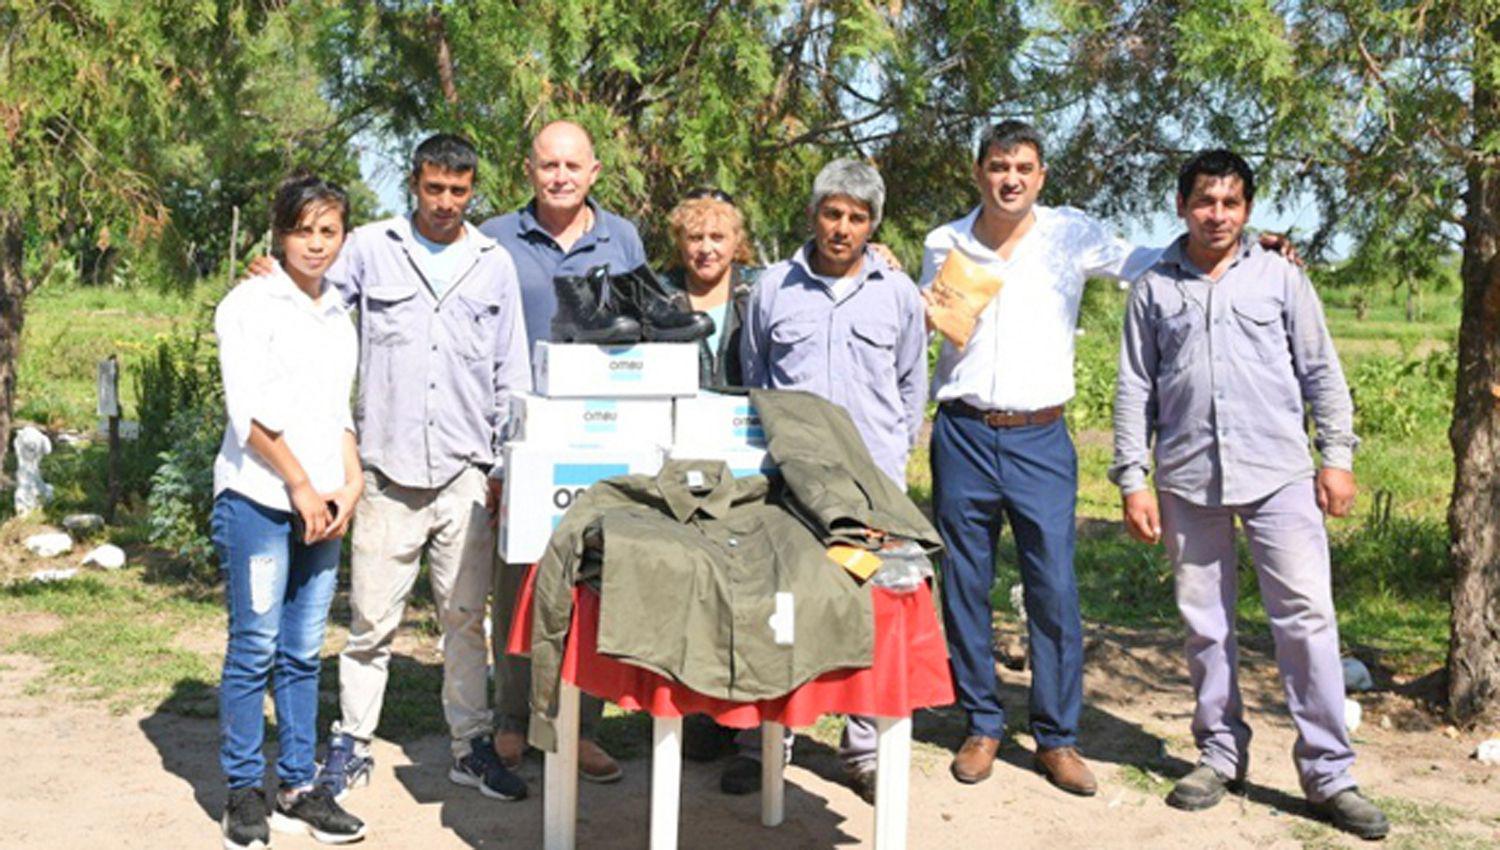 Personal de la Huerta Orgaacutenica de la comuna termense recibioacute sus nuevos uniformes